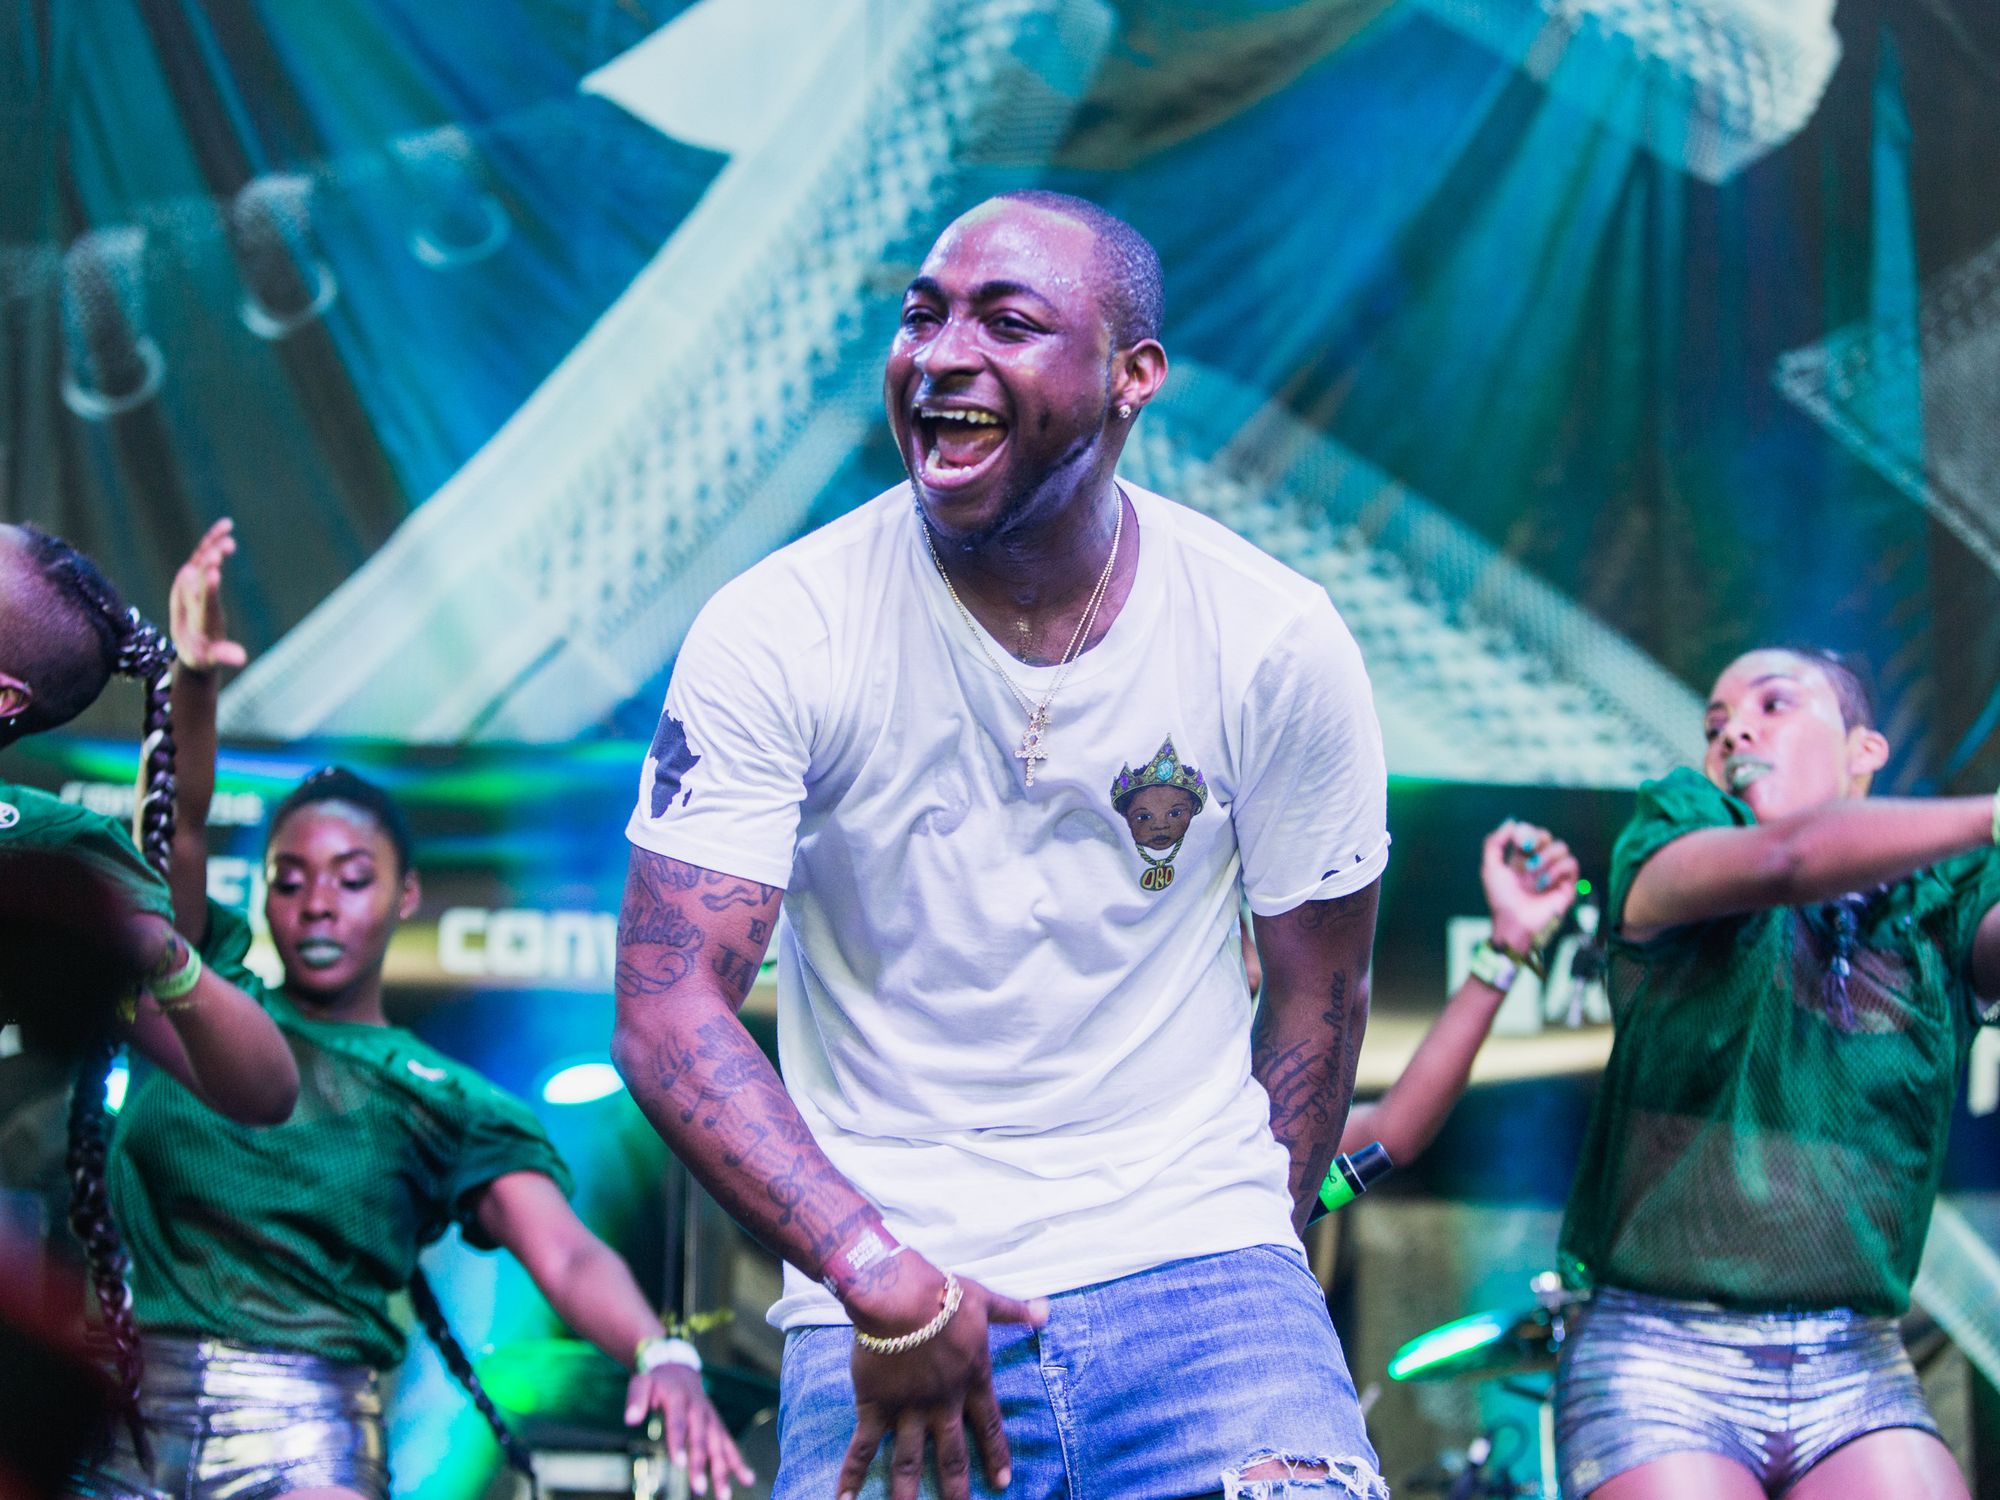 Nigerian Afrobeats Star Davido on stage in white shirt